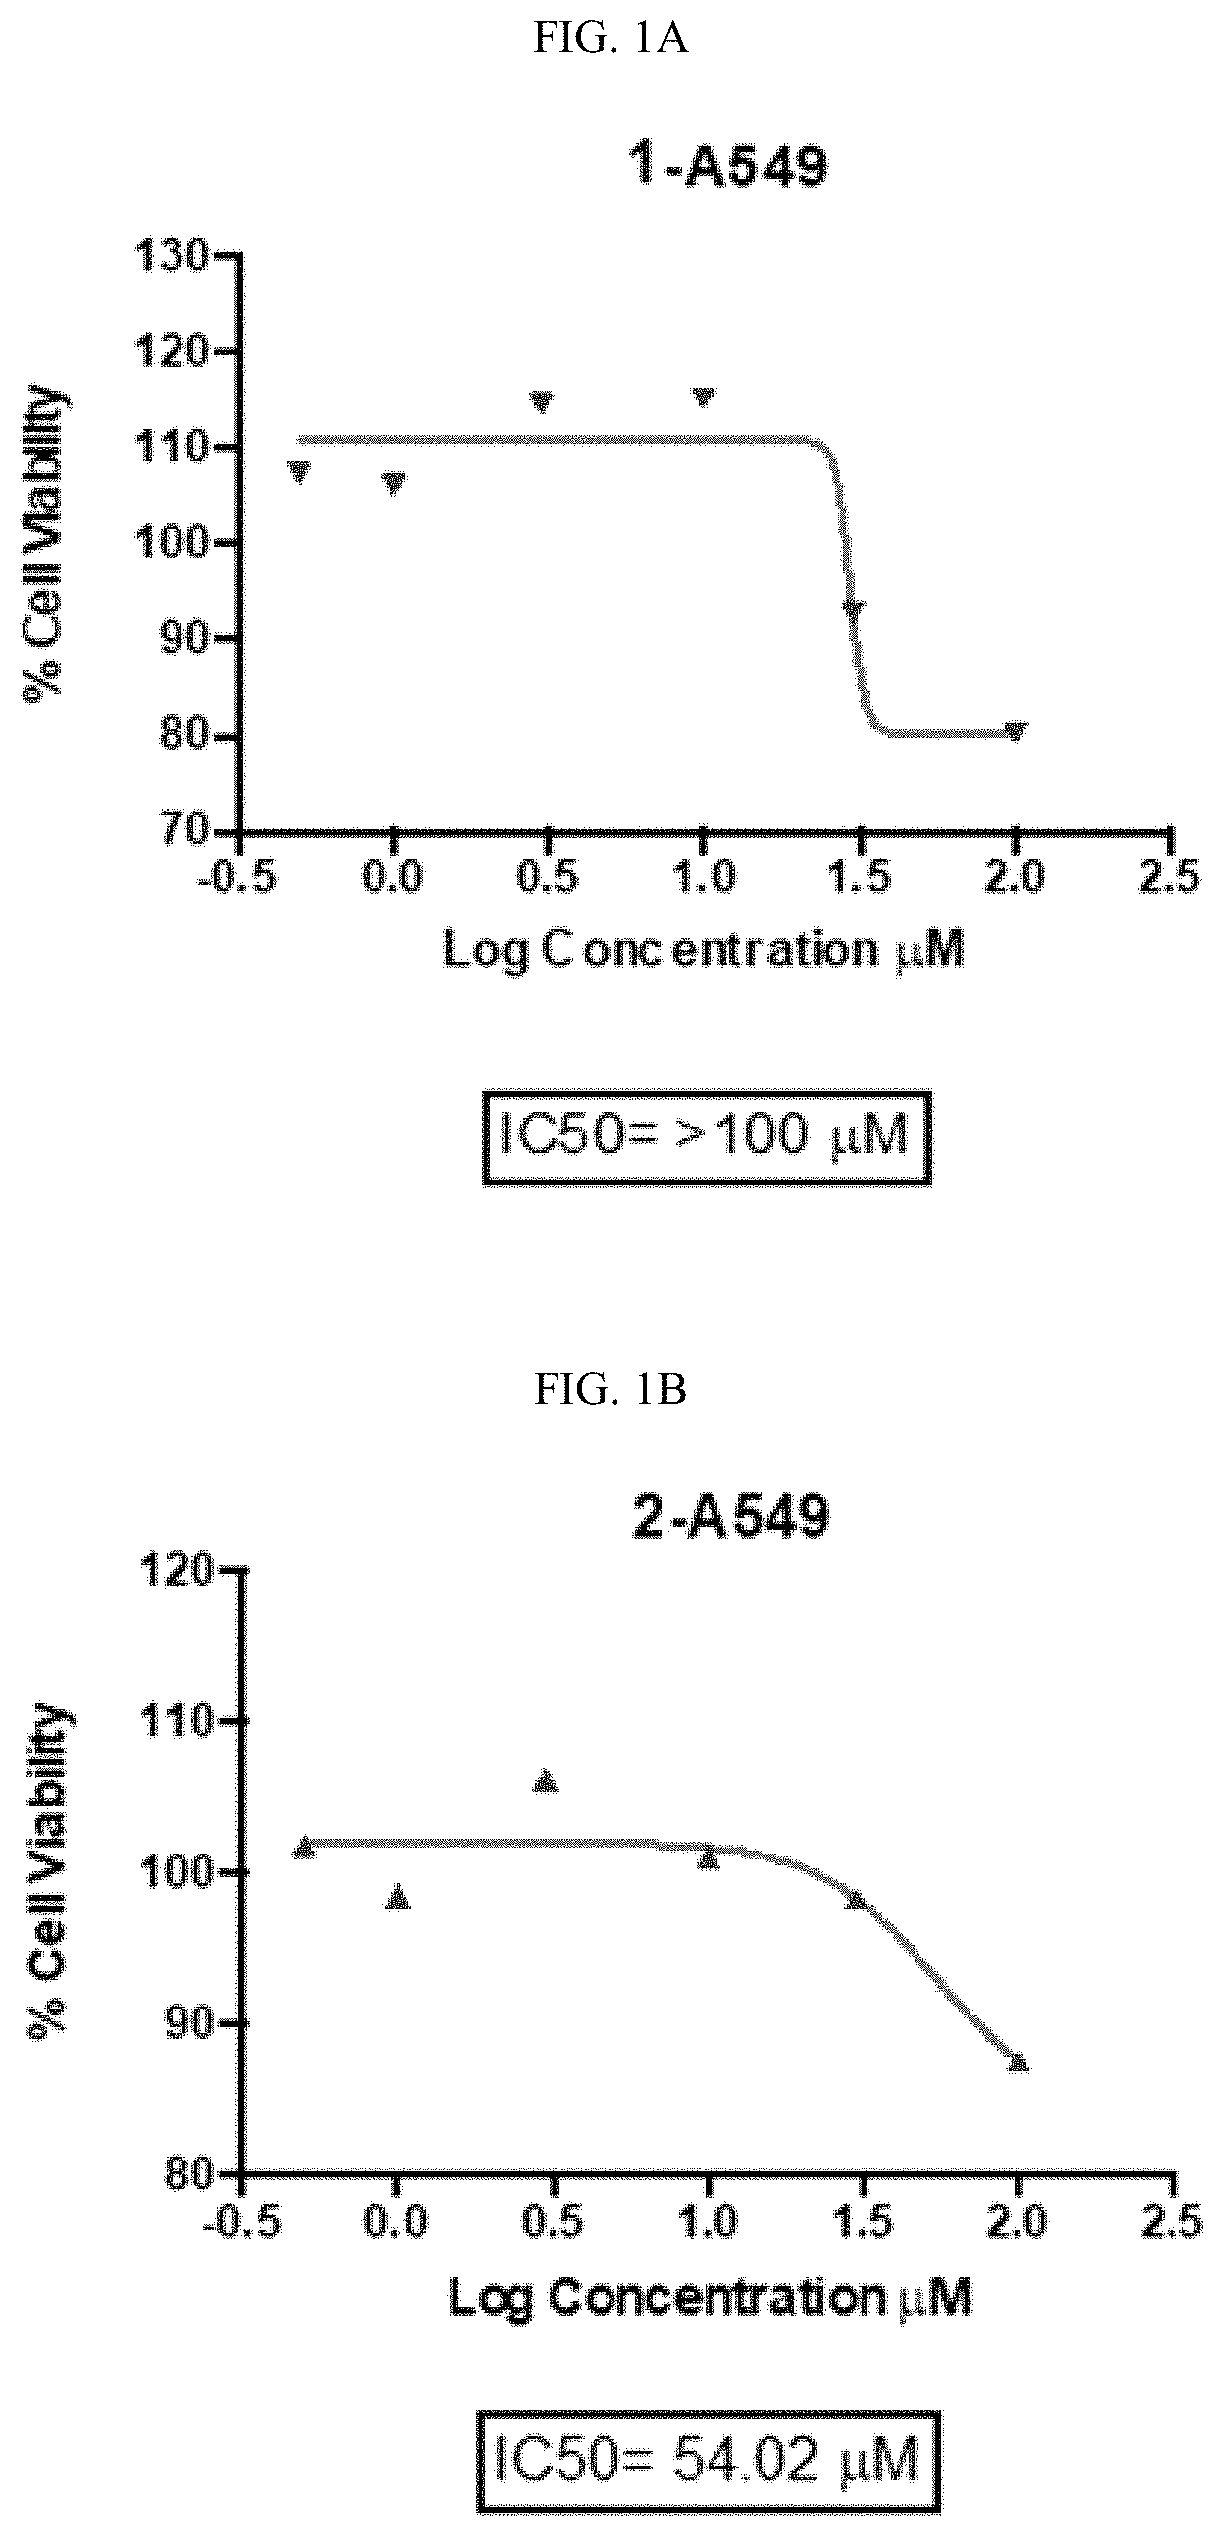 Platinum(II) ammine selenourea complexes and methods of treating cancer